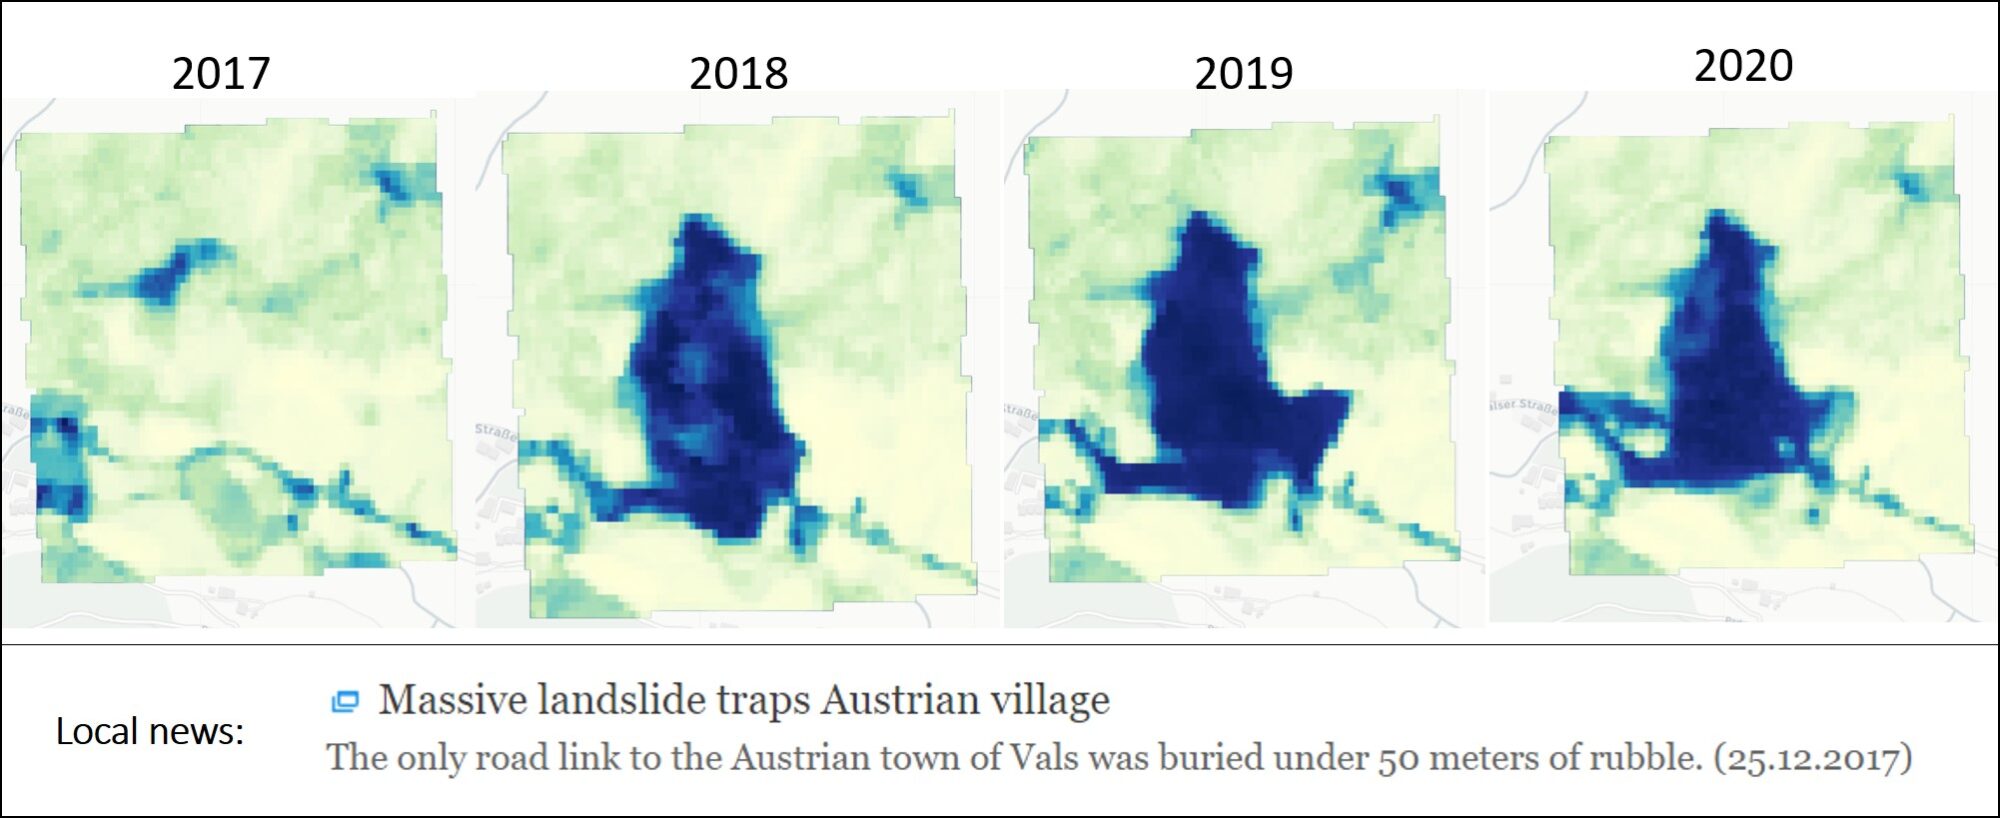 Landslide detection based on semantically enriched Sentinel-2 imagery from 2017-2020.